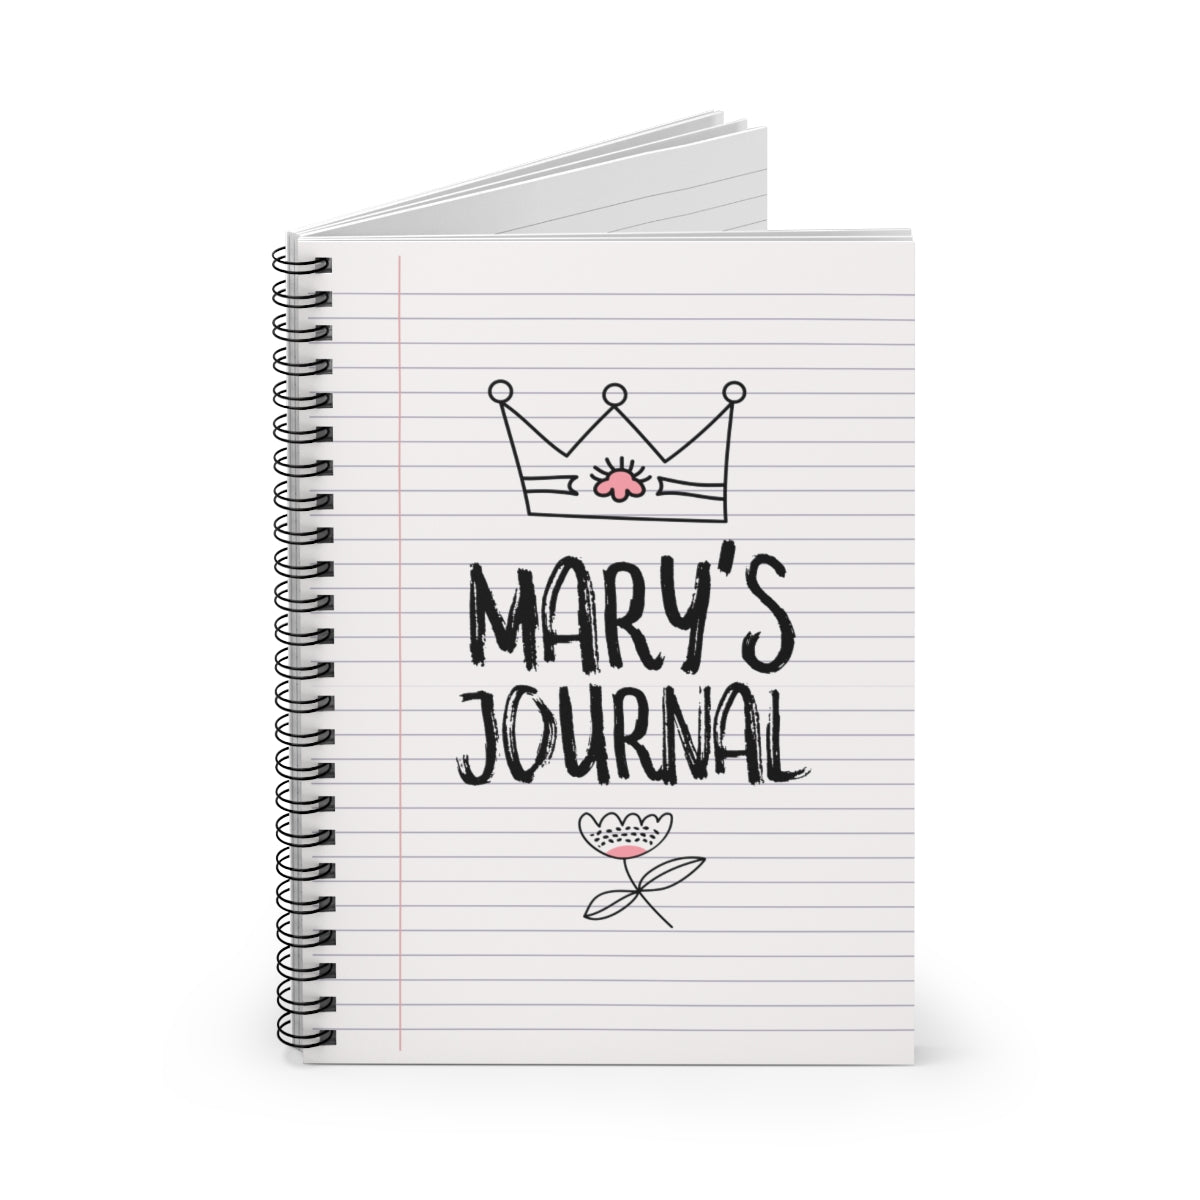 Personalized Gratitude Journal